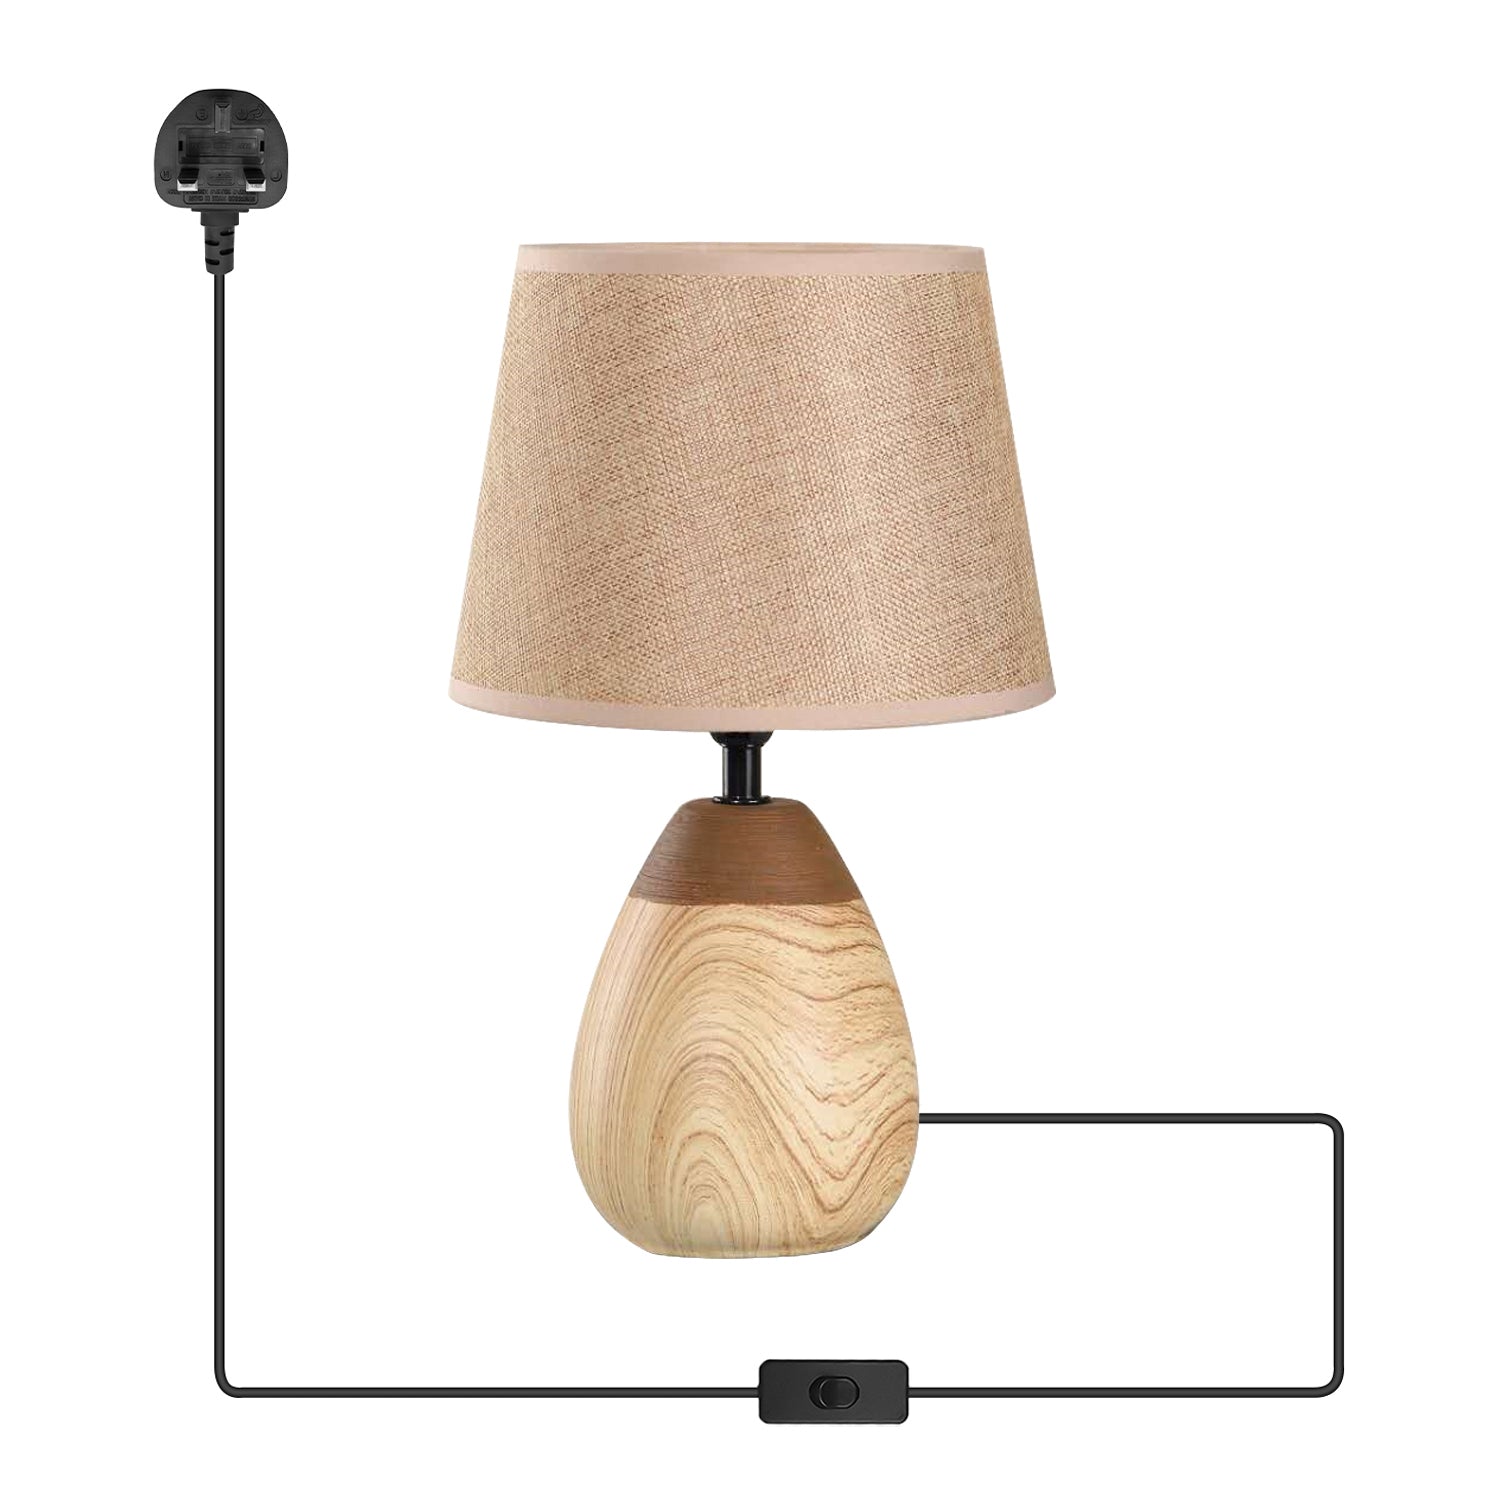 3 pin plug in table lamp light fabric lampshade light